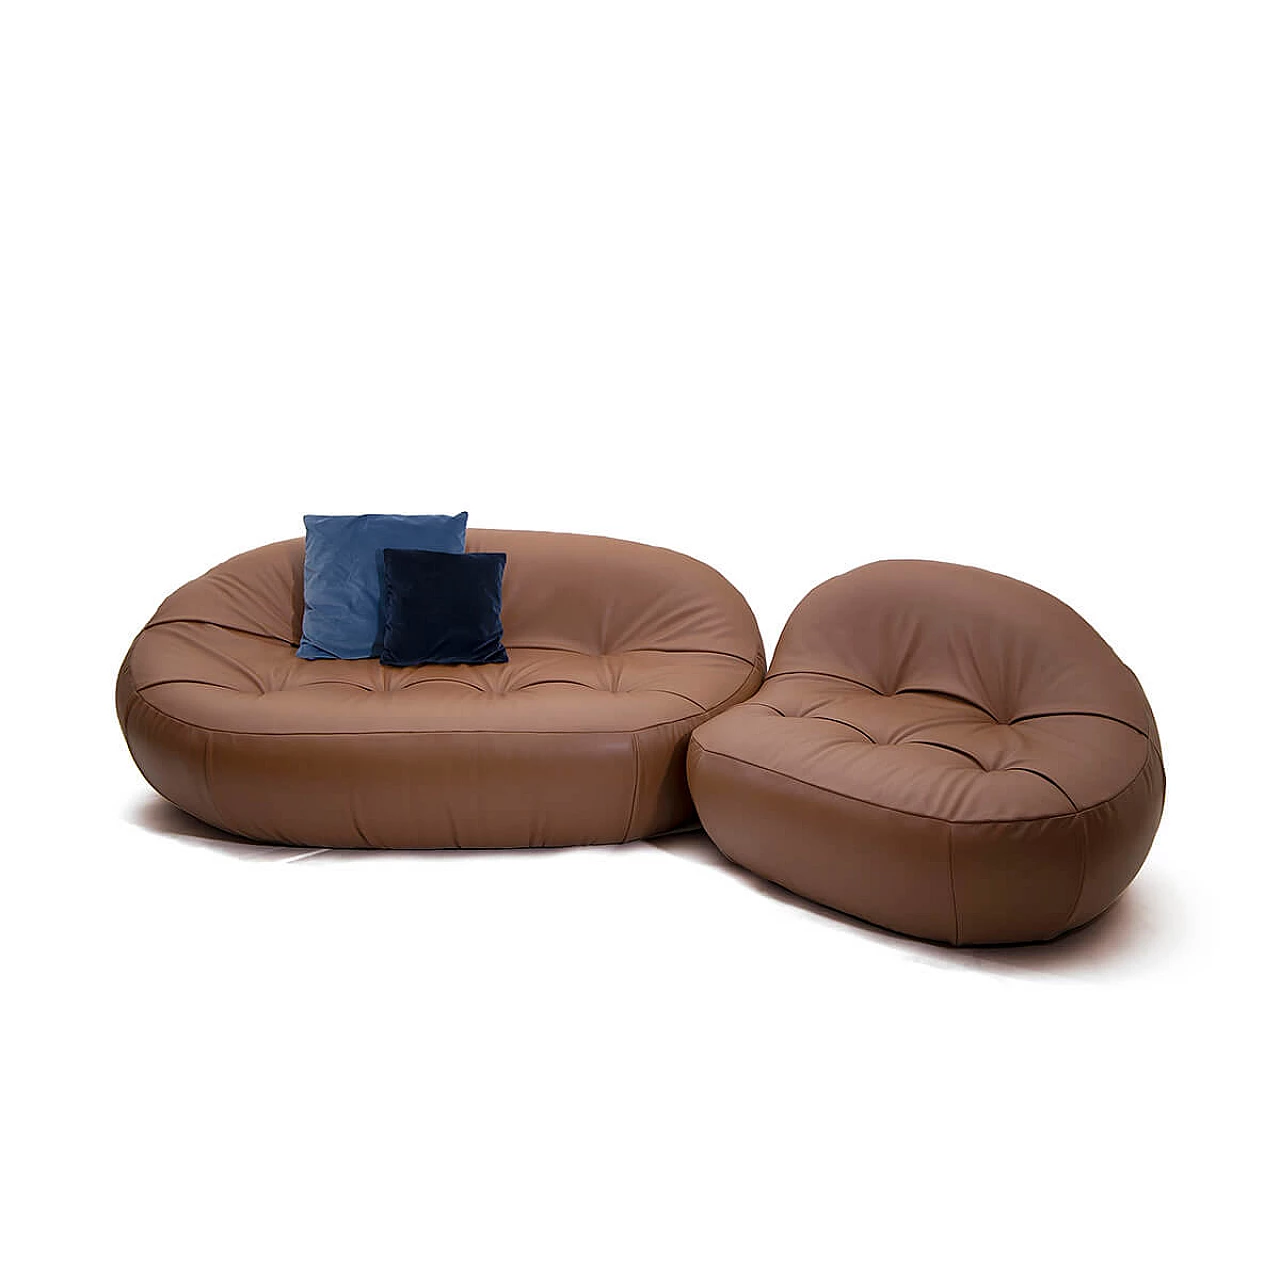 Plumpstones brown capitonné leather sofa by spHaus 1